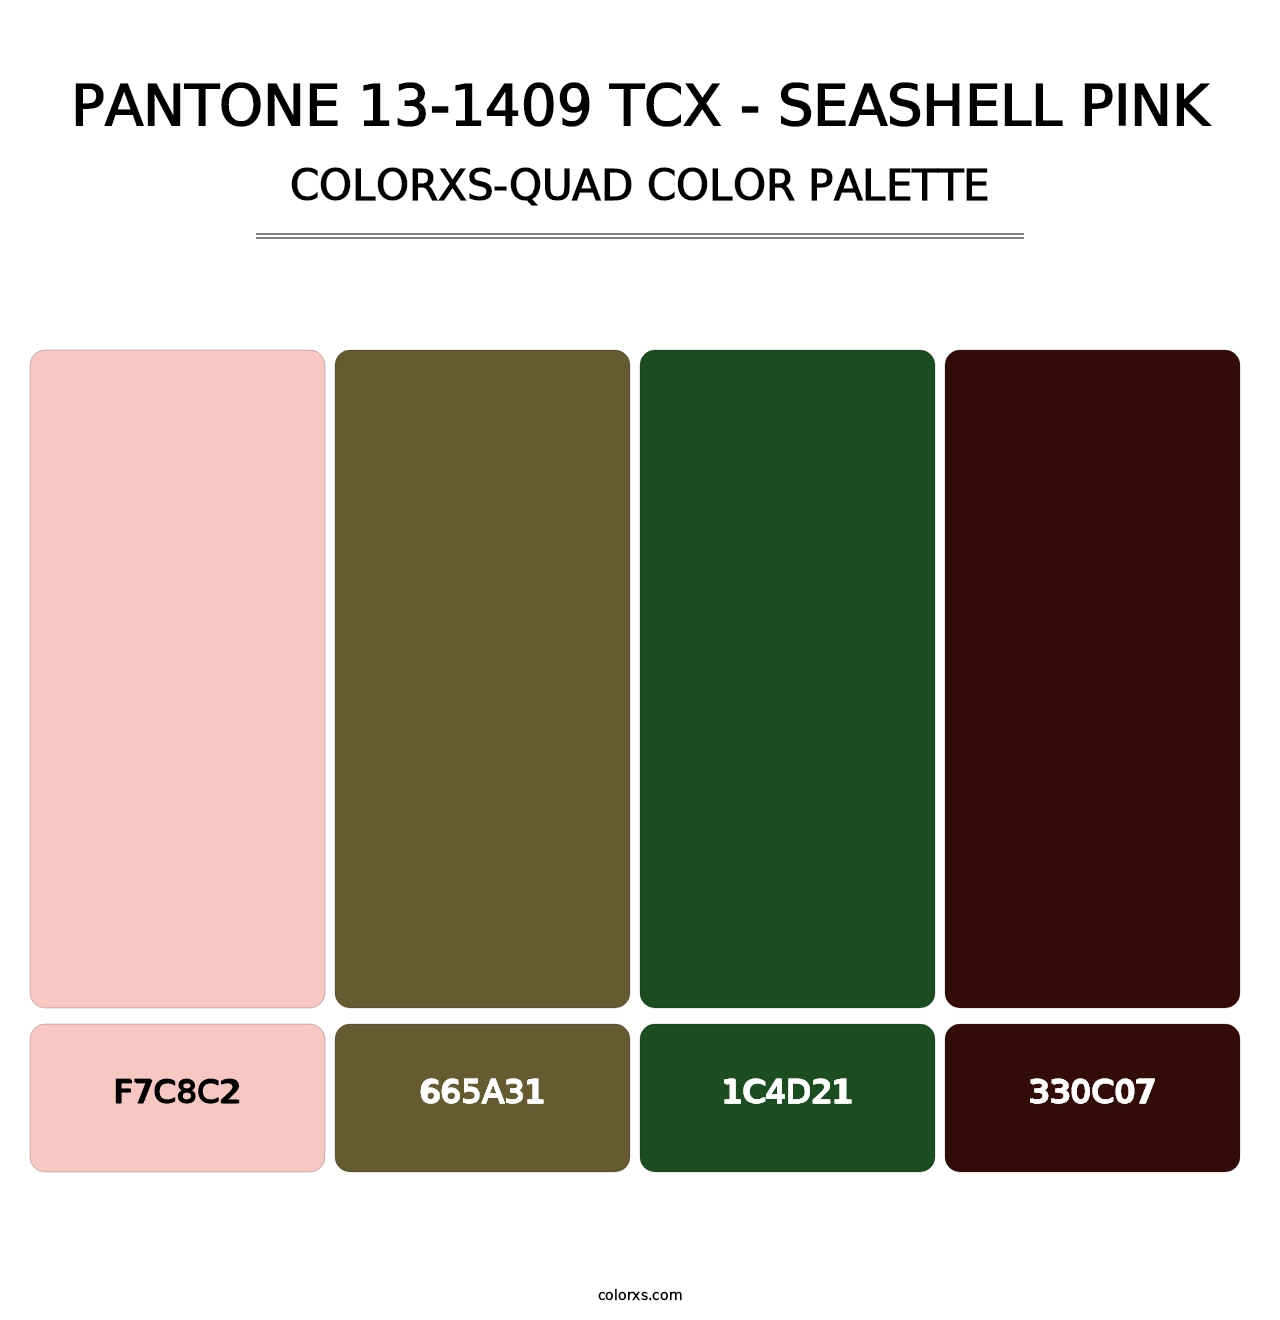 PANTONE 13-1409 TCX - Seashell Pink - Colorxs Quad Palette